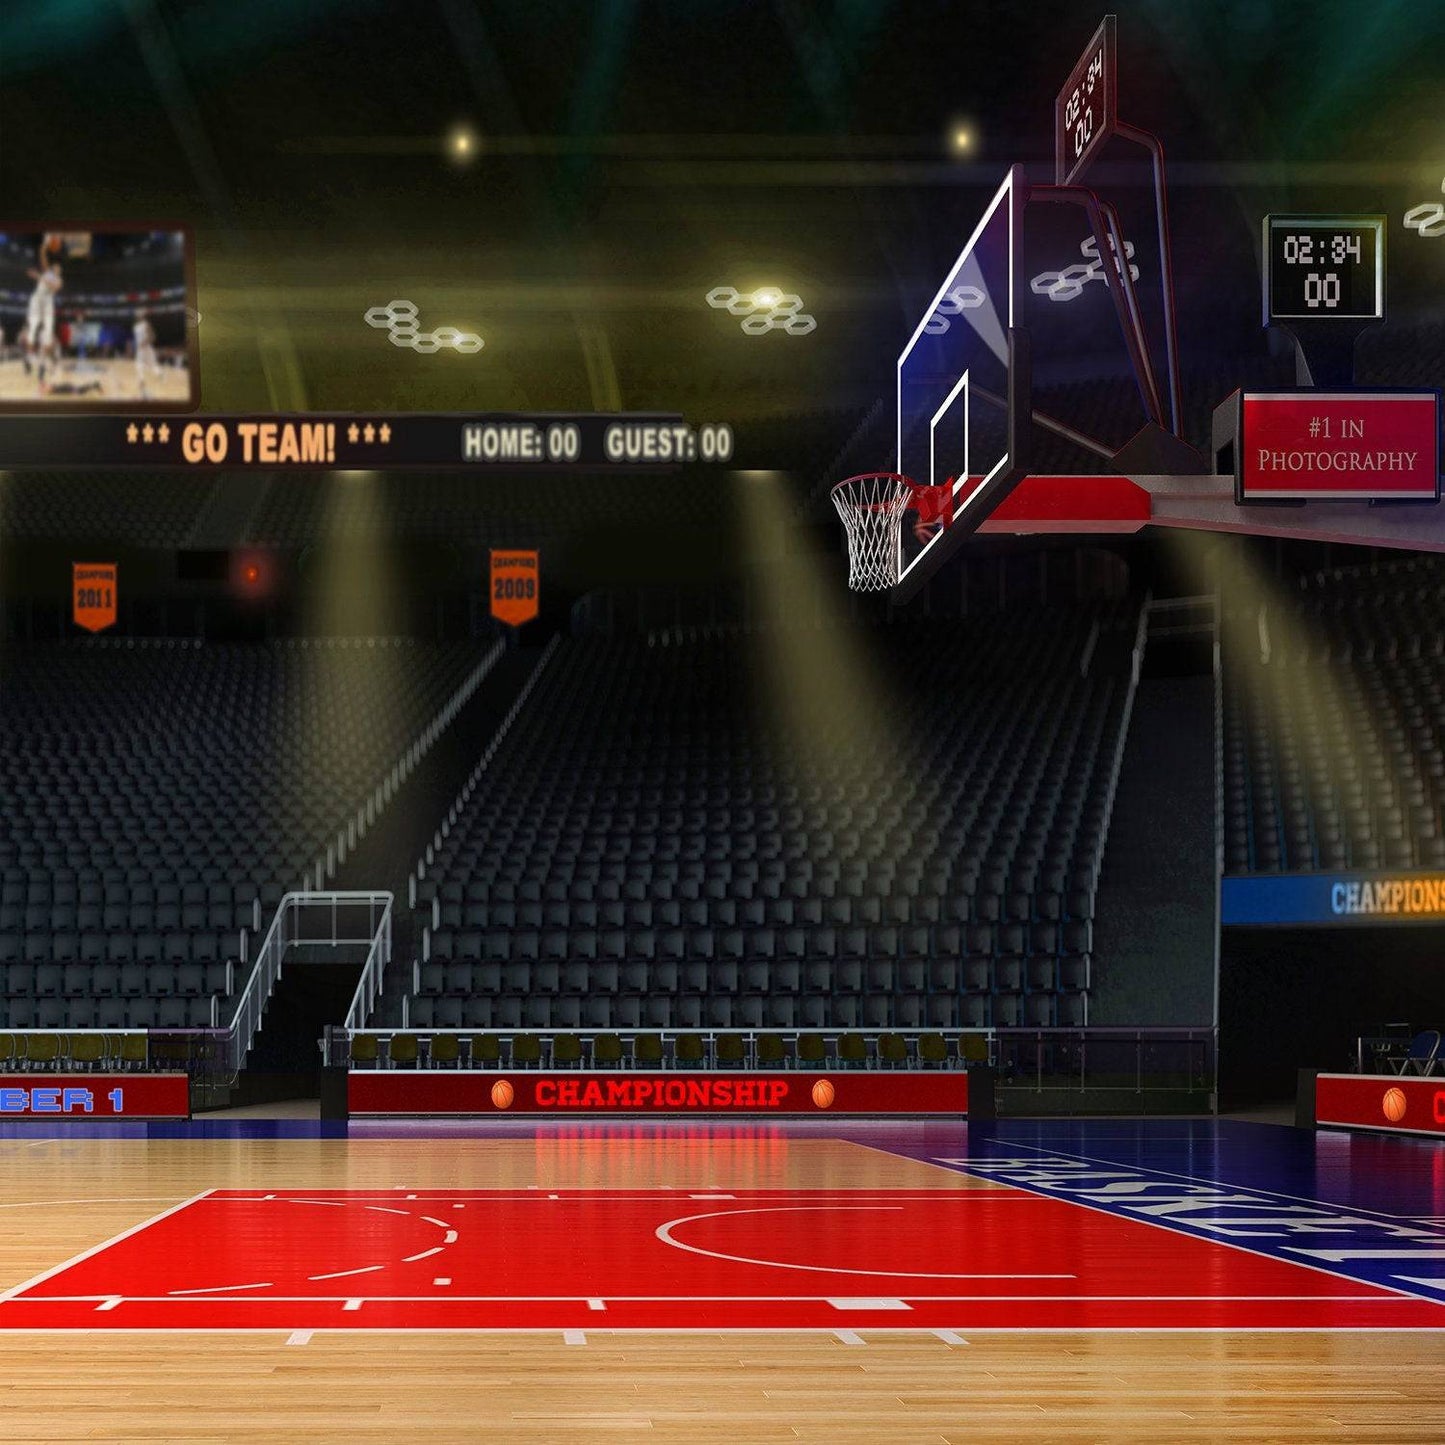 NBA Basketball Court Backdrop - Basic 10  x 8  